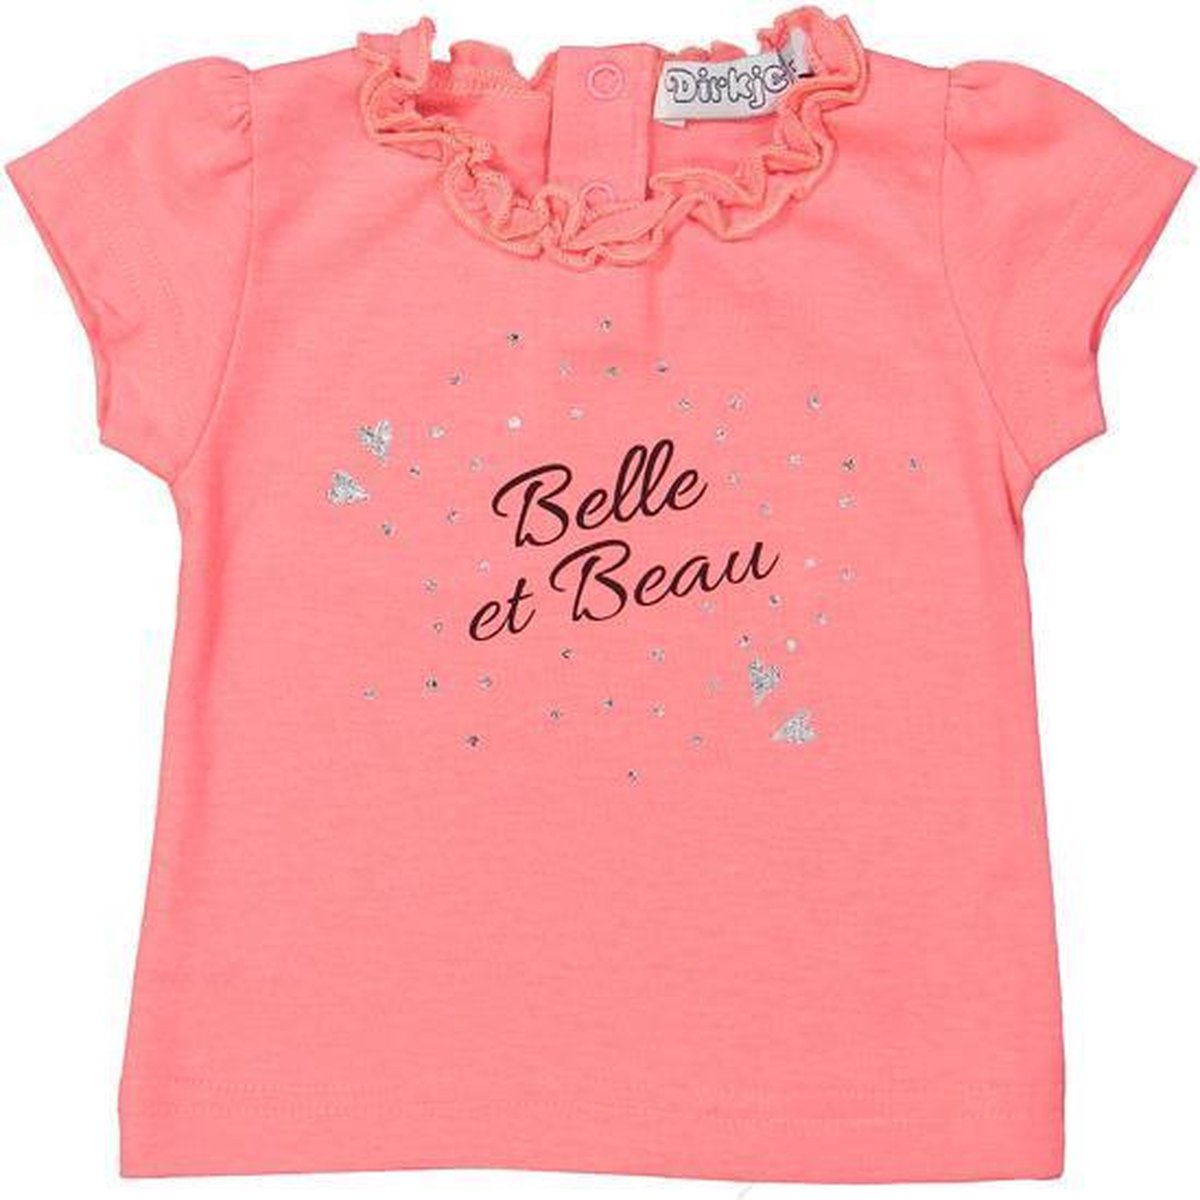 T-Shirt Dirkje Neon Pink Belle est Beau maat 80 | bol.com